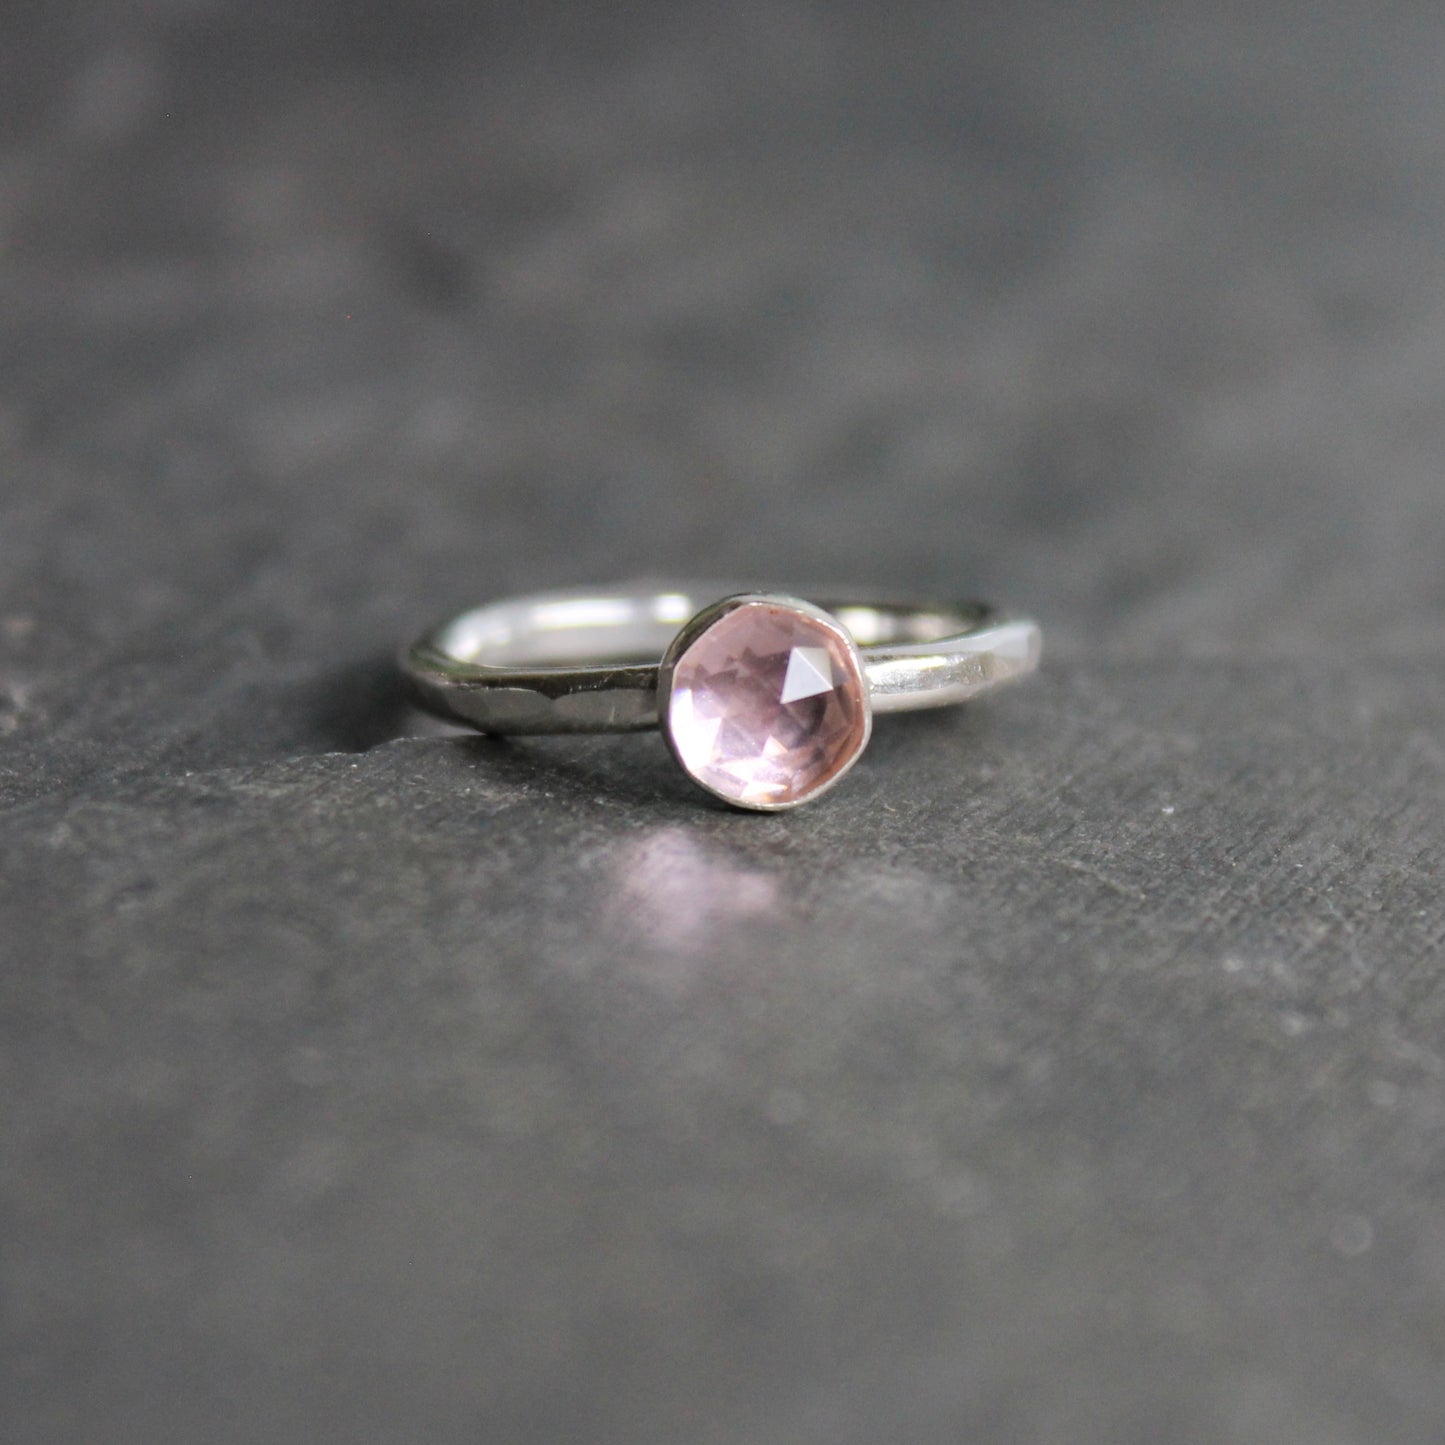 A 6mm round rose cut bezel set morganite gemstone on a sturdy handmade sterling silver band.